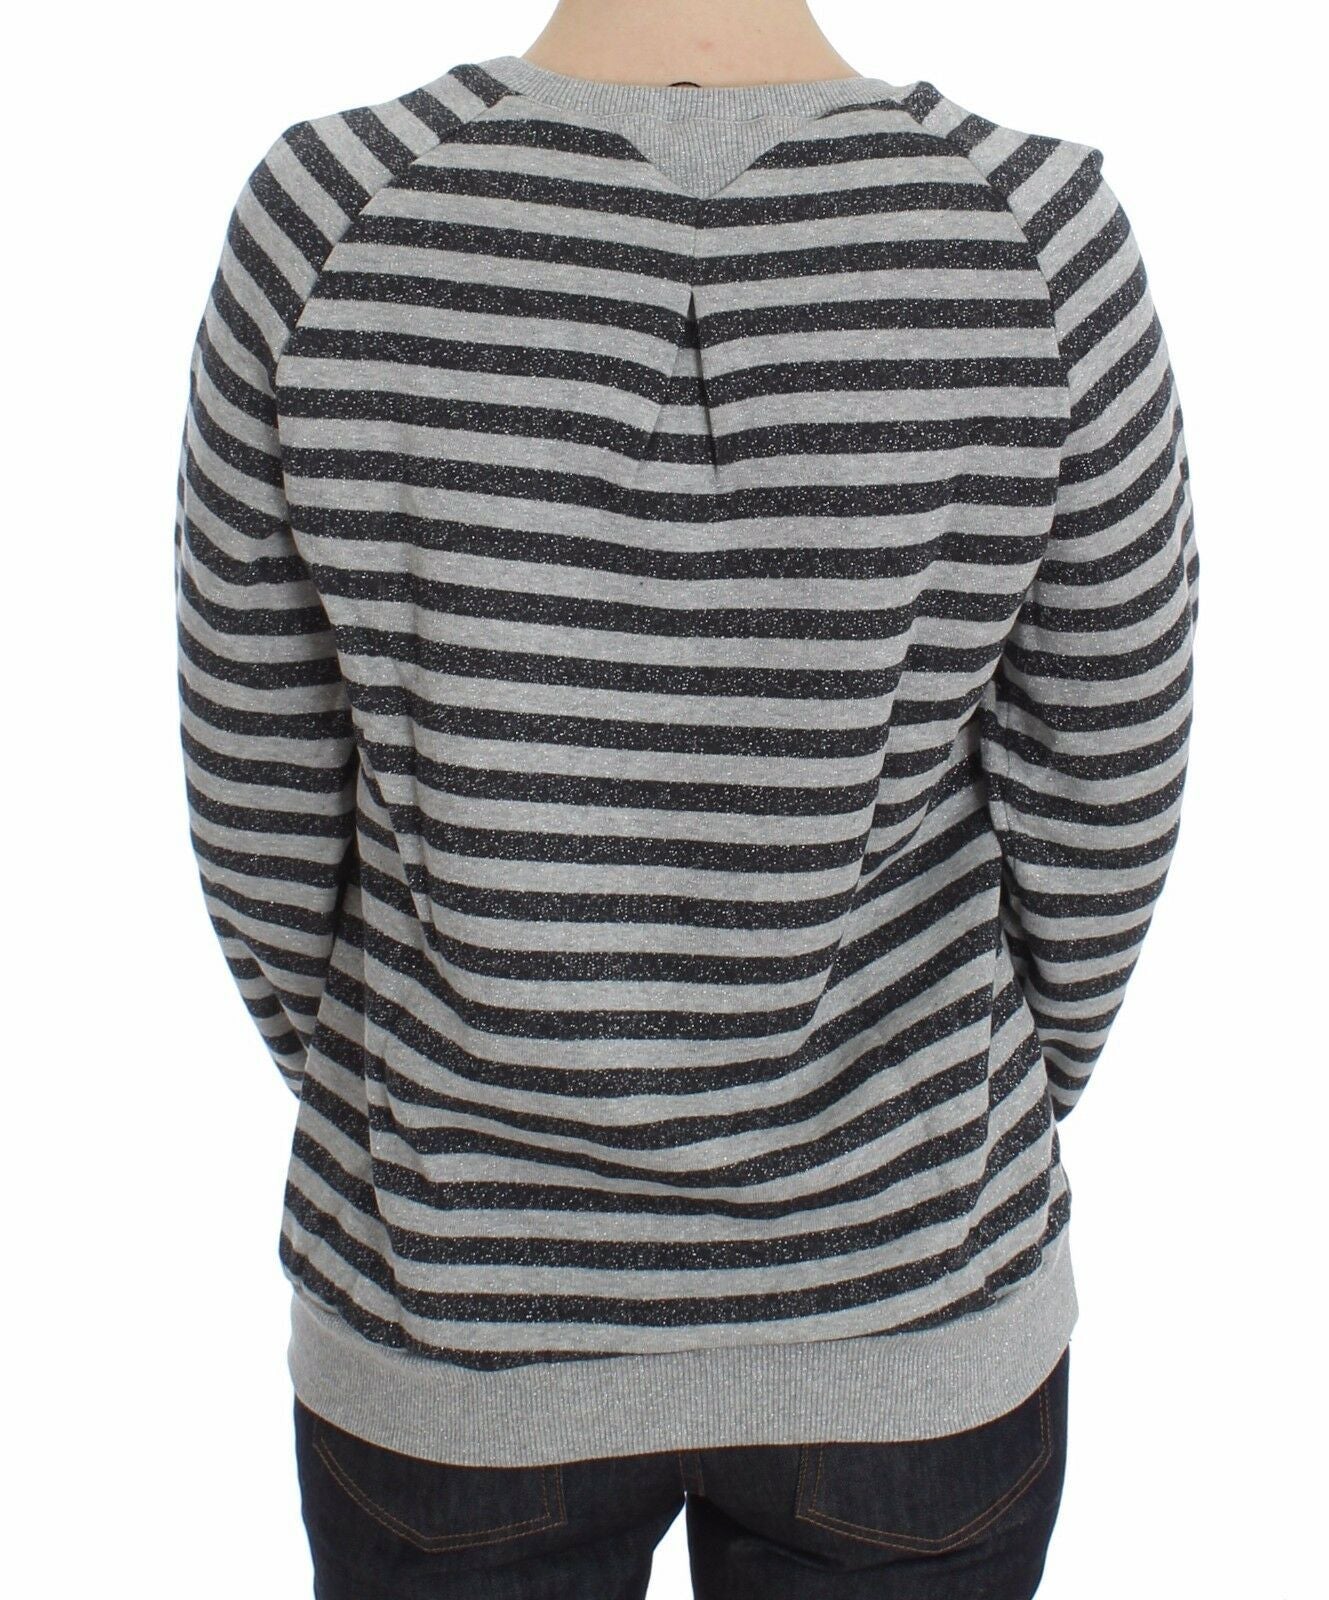 Exte Chic Gray Striped Crew-Neck Sweater